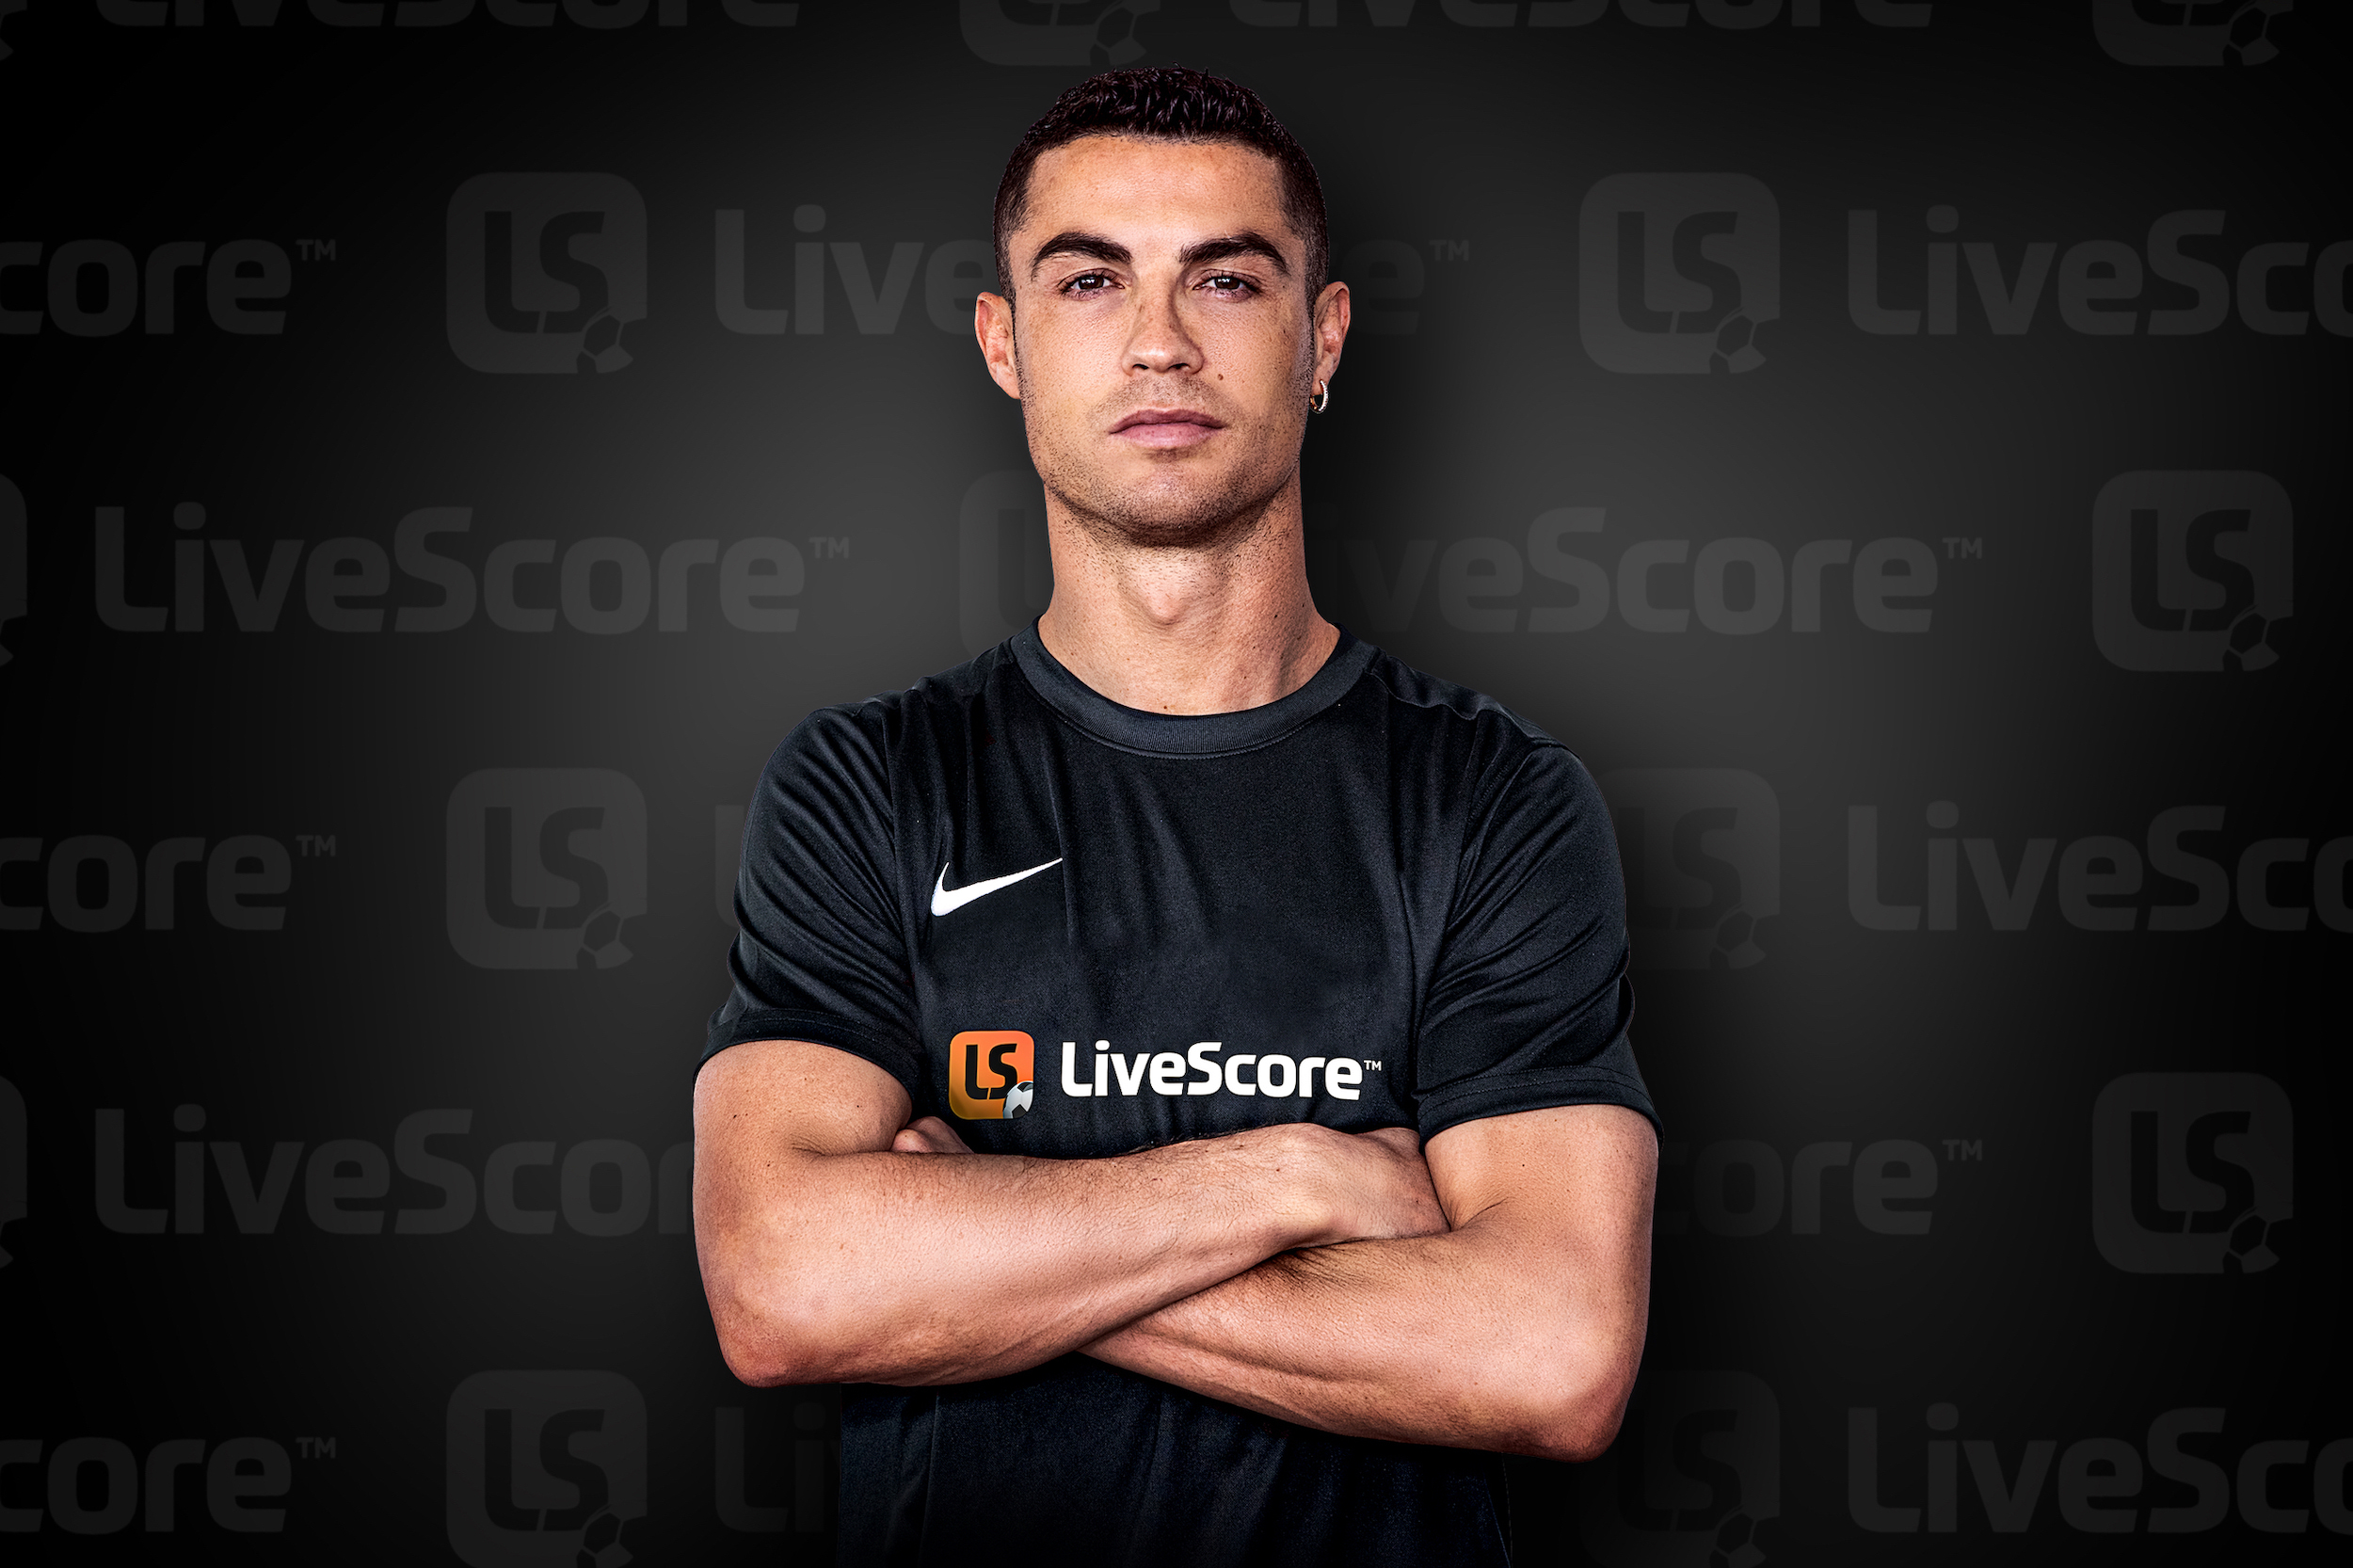 Cristiano Ronaldo nouvel ambassadeur de lapplication LiveScore (stats et streaming)